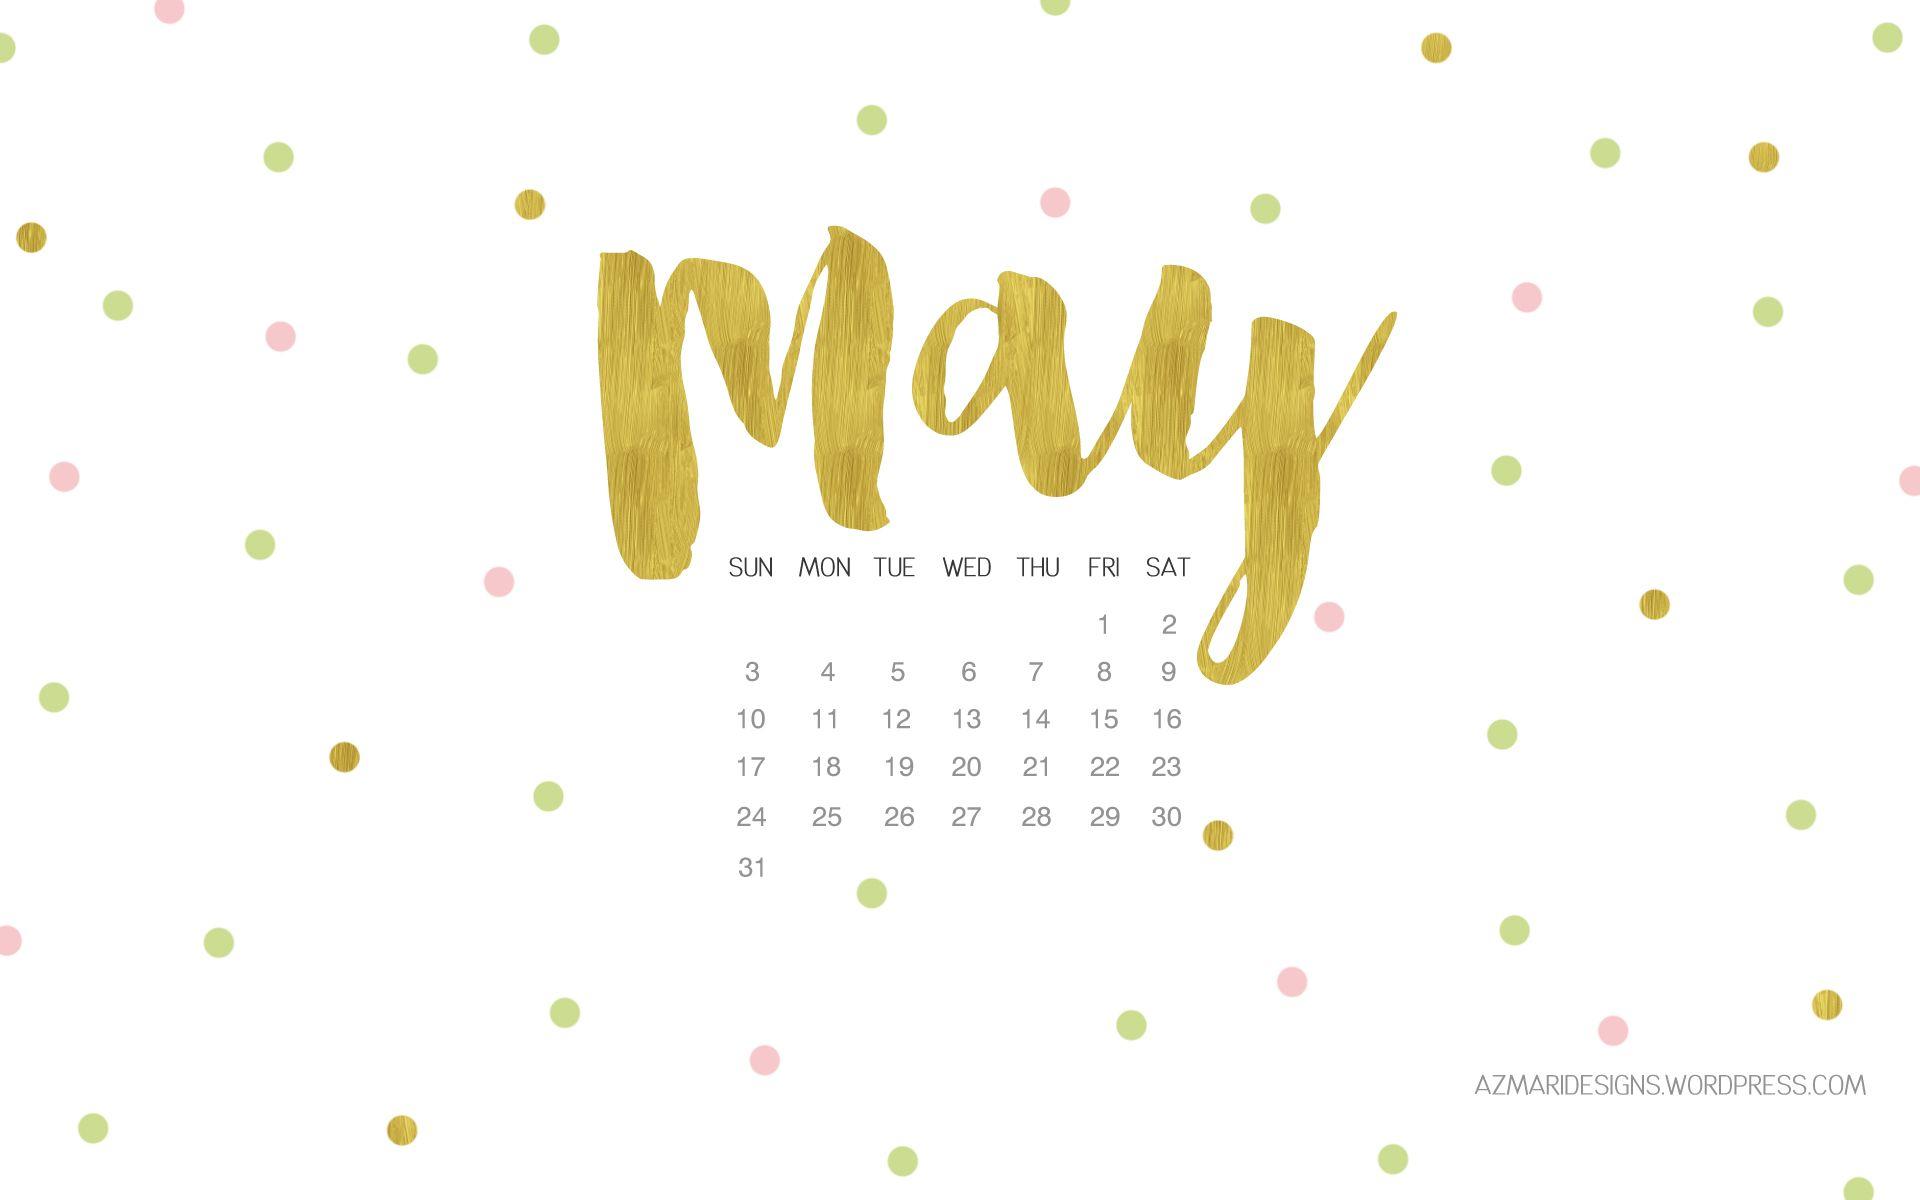 Image Malaysia Calendar 2016. Calendar 2016